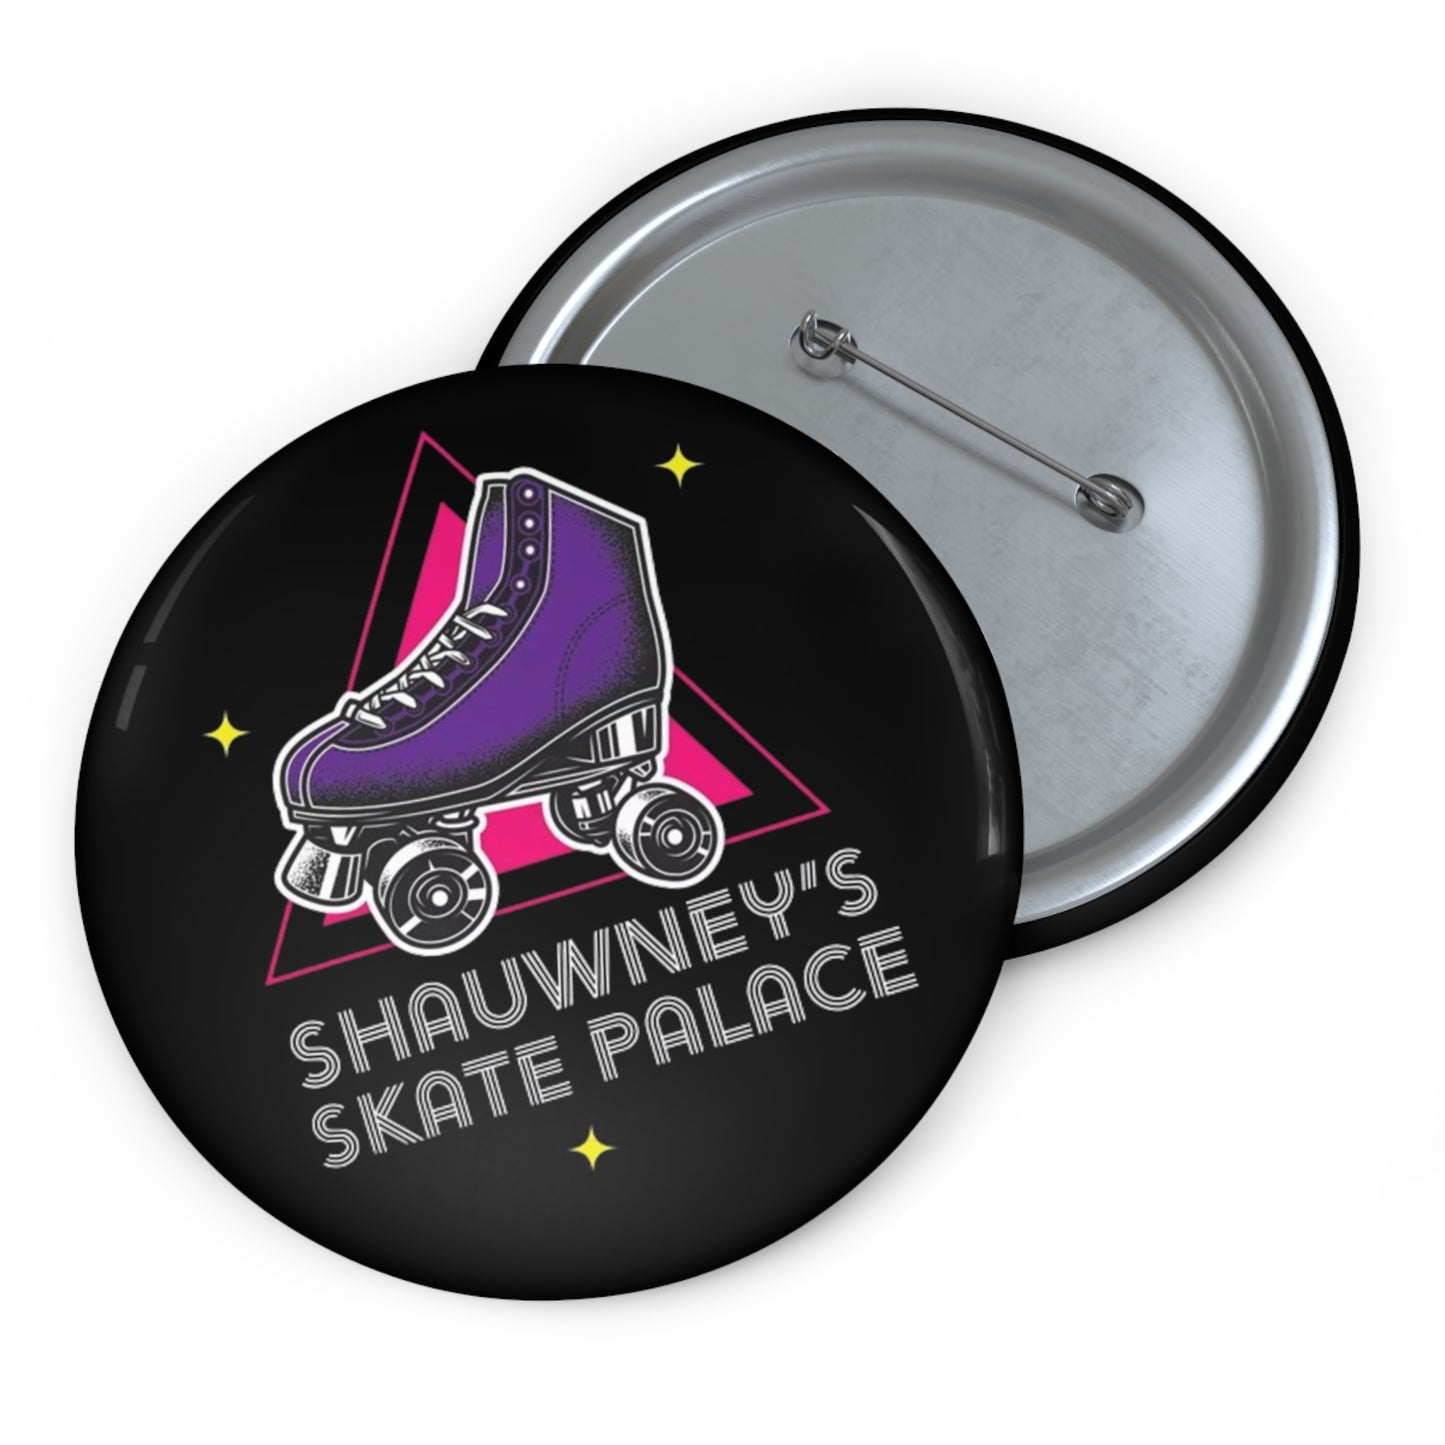 Shauwney's Skate Palace Pin Button